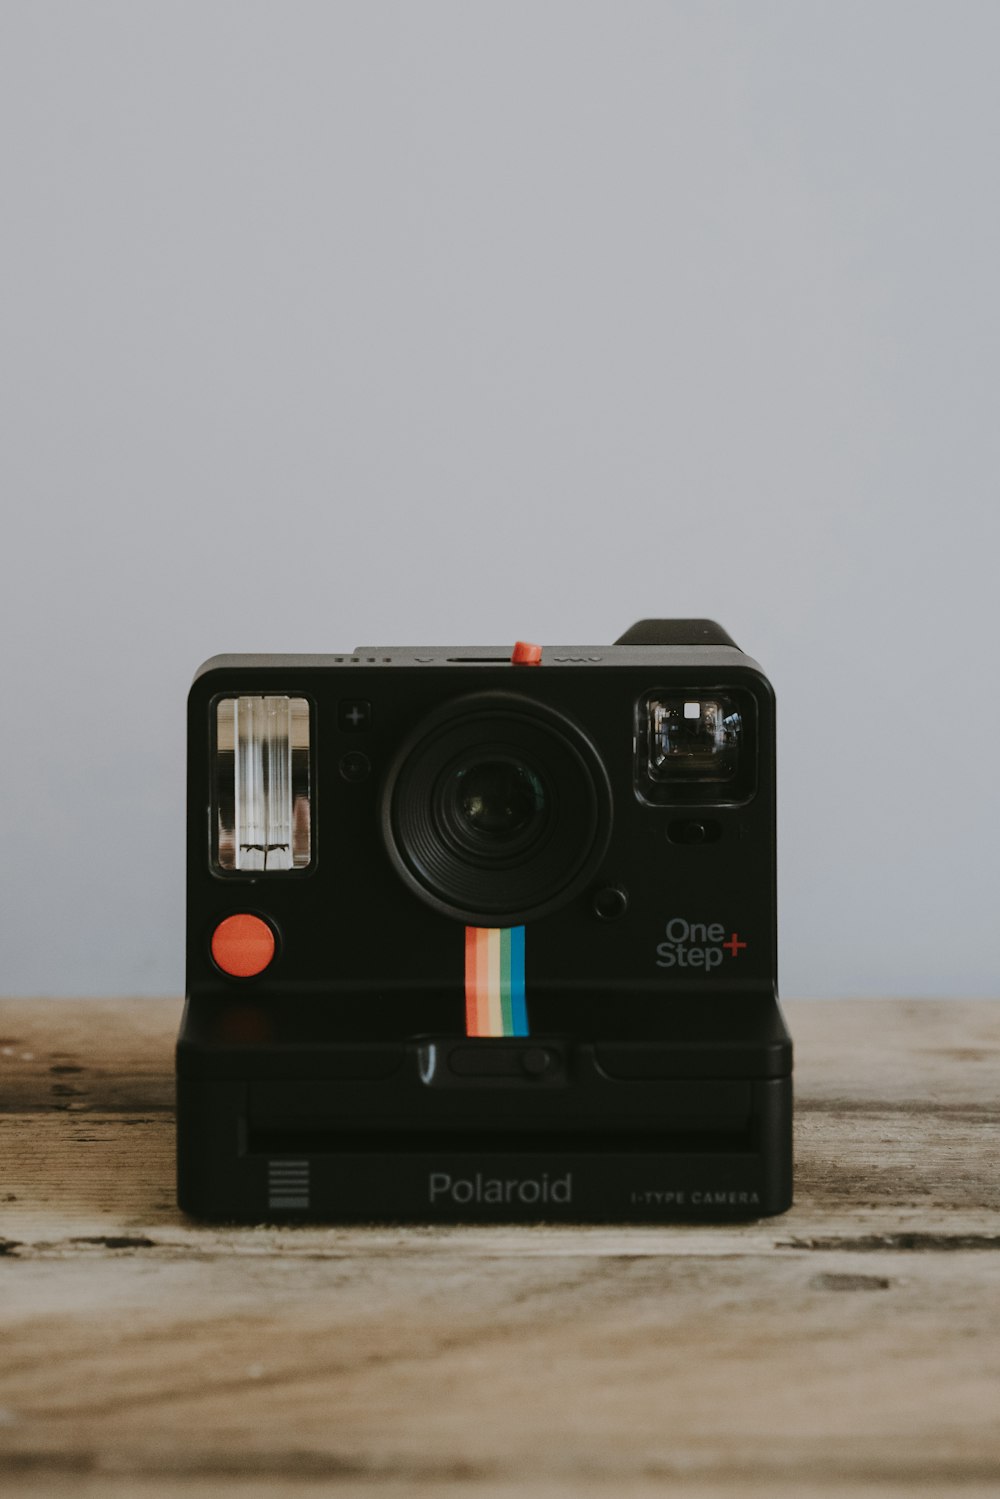 fotocamera istantanea Polaroid One Step+ nera su superficie marrone